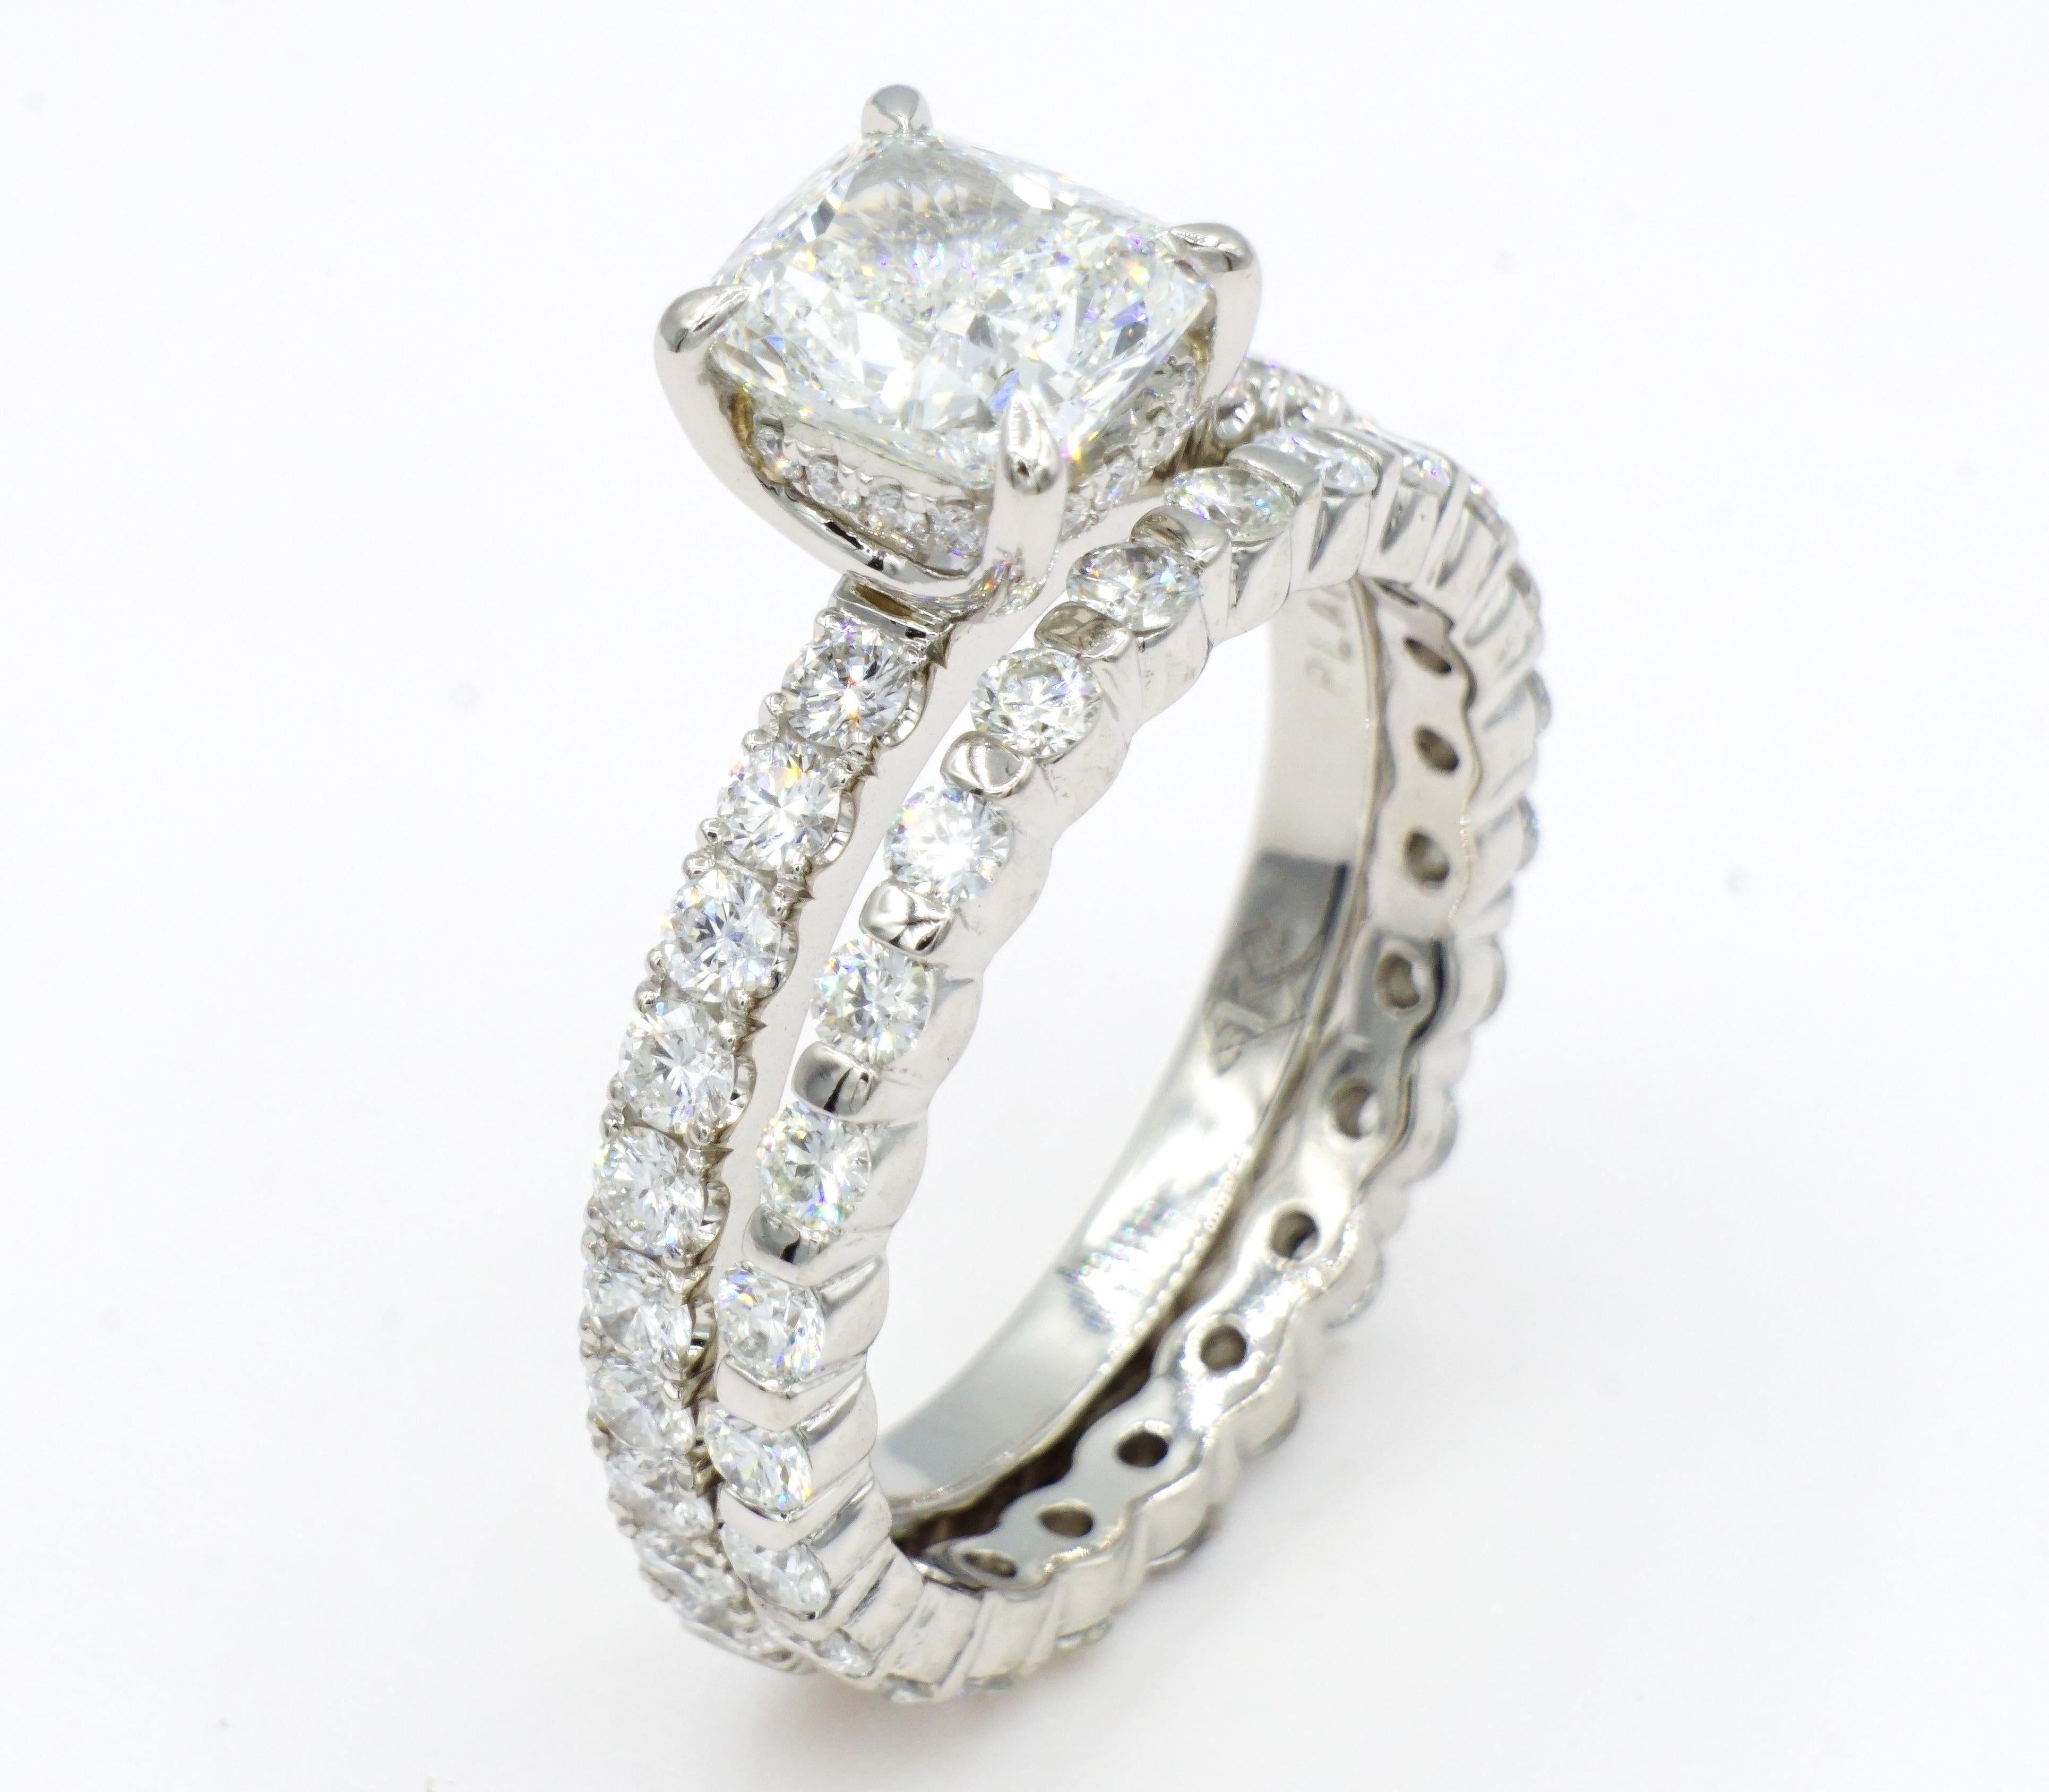 Women's Platinum Cushion 1.51ct Diamond Engagement Ring GIA Cert G SI2, size 6.25 - NEW